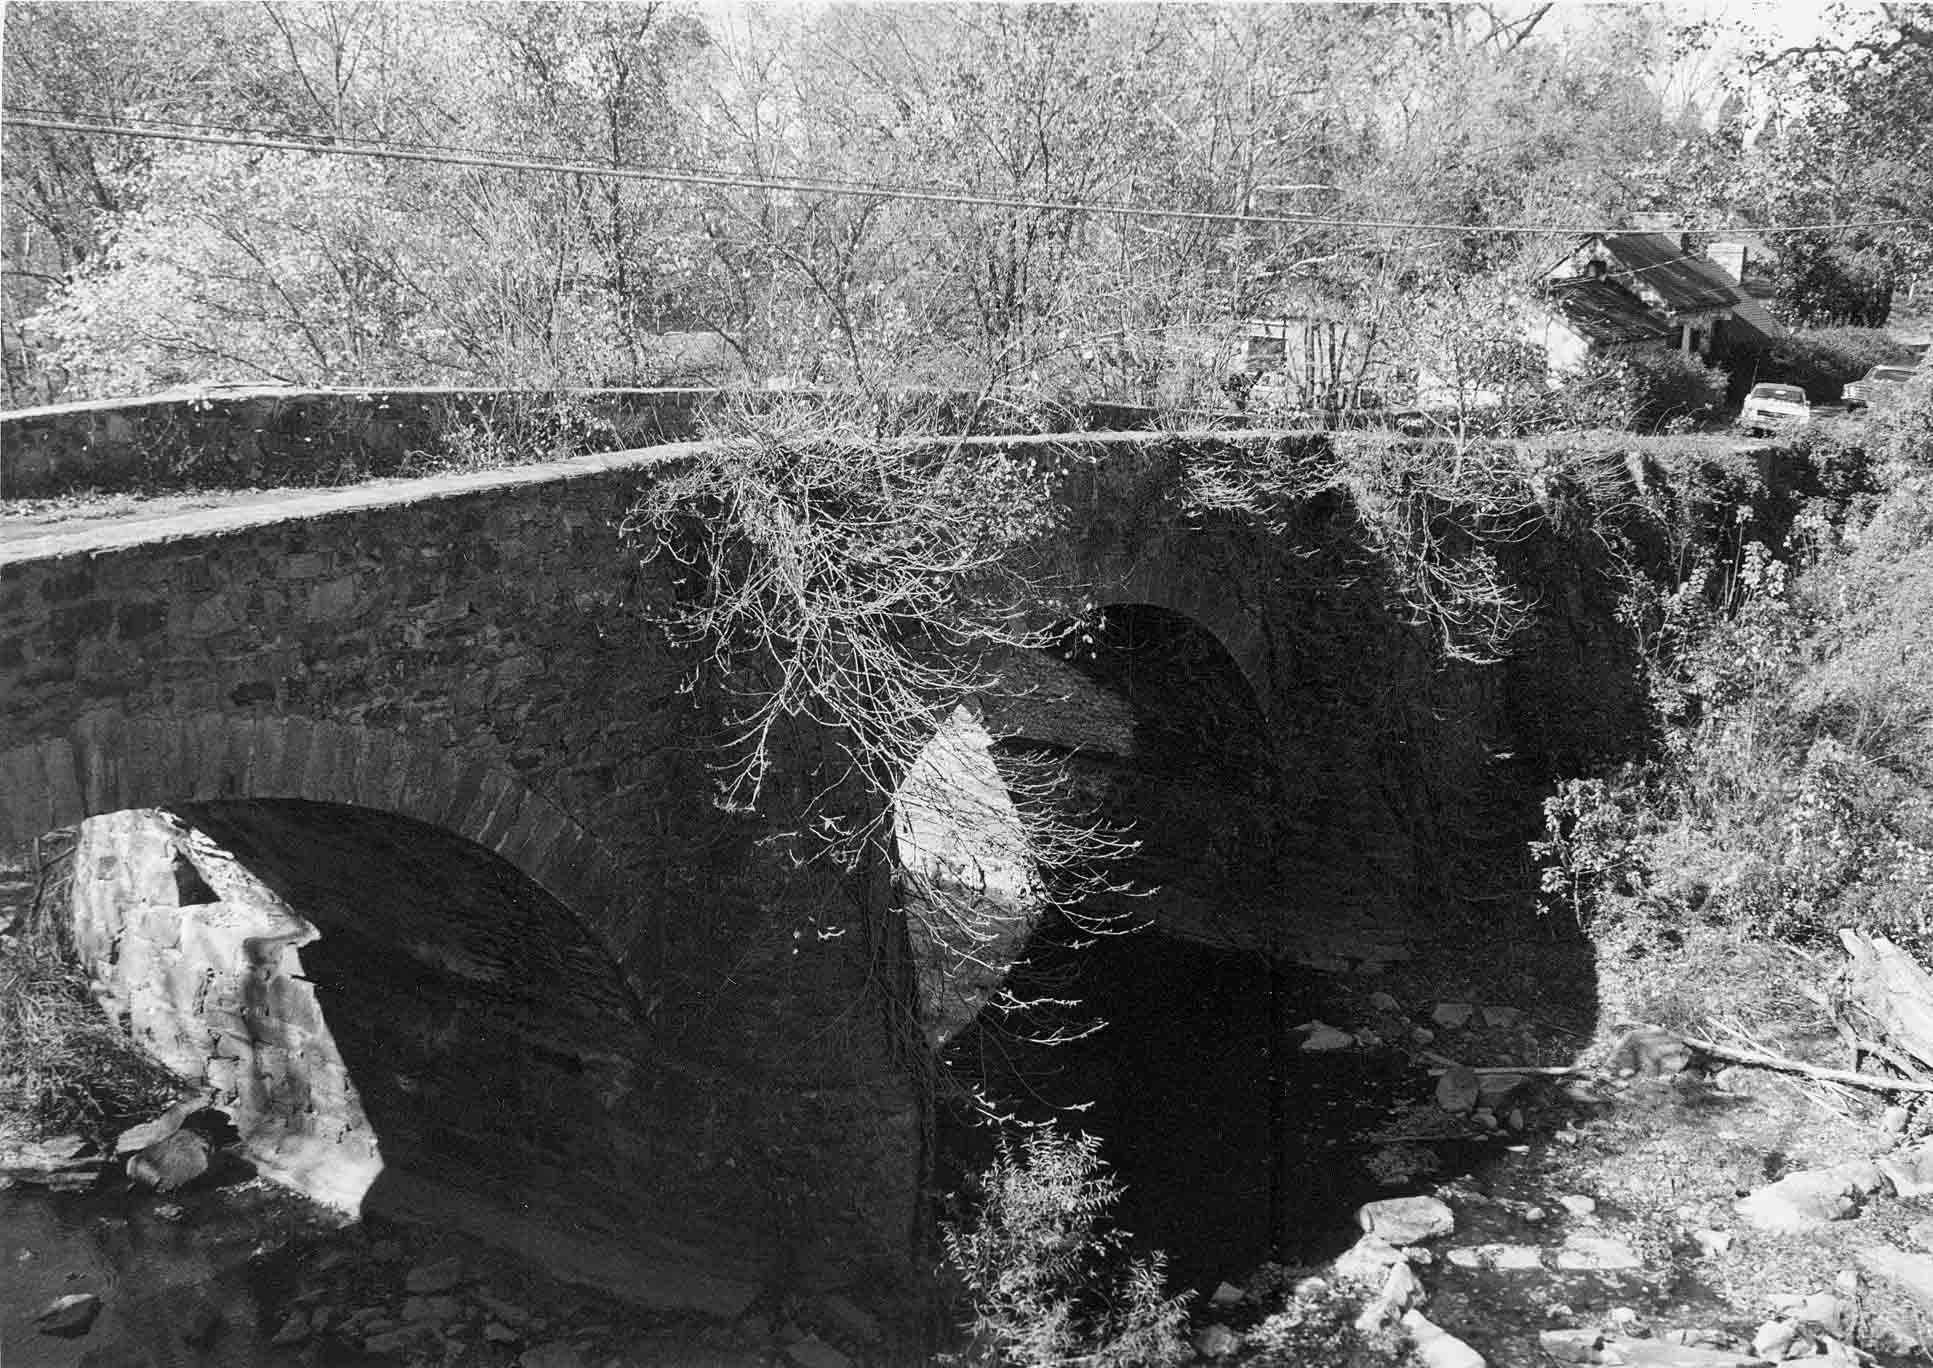 DAR, Stone Bridge Chapter, Sterling, VA - History of the Stone Bridge